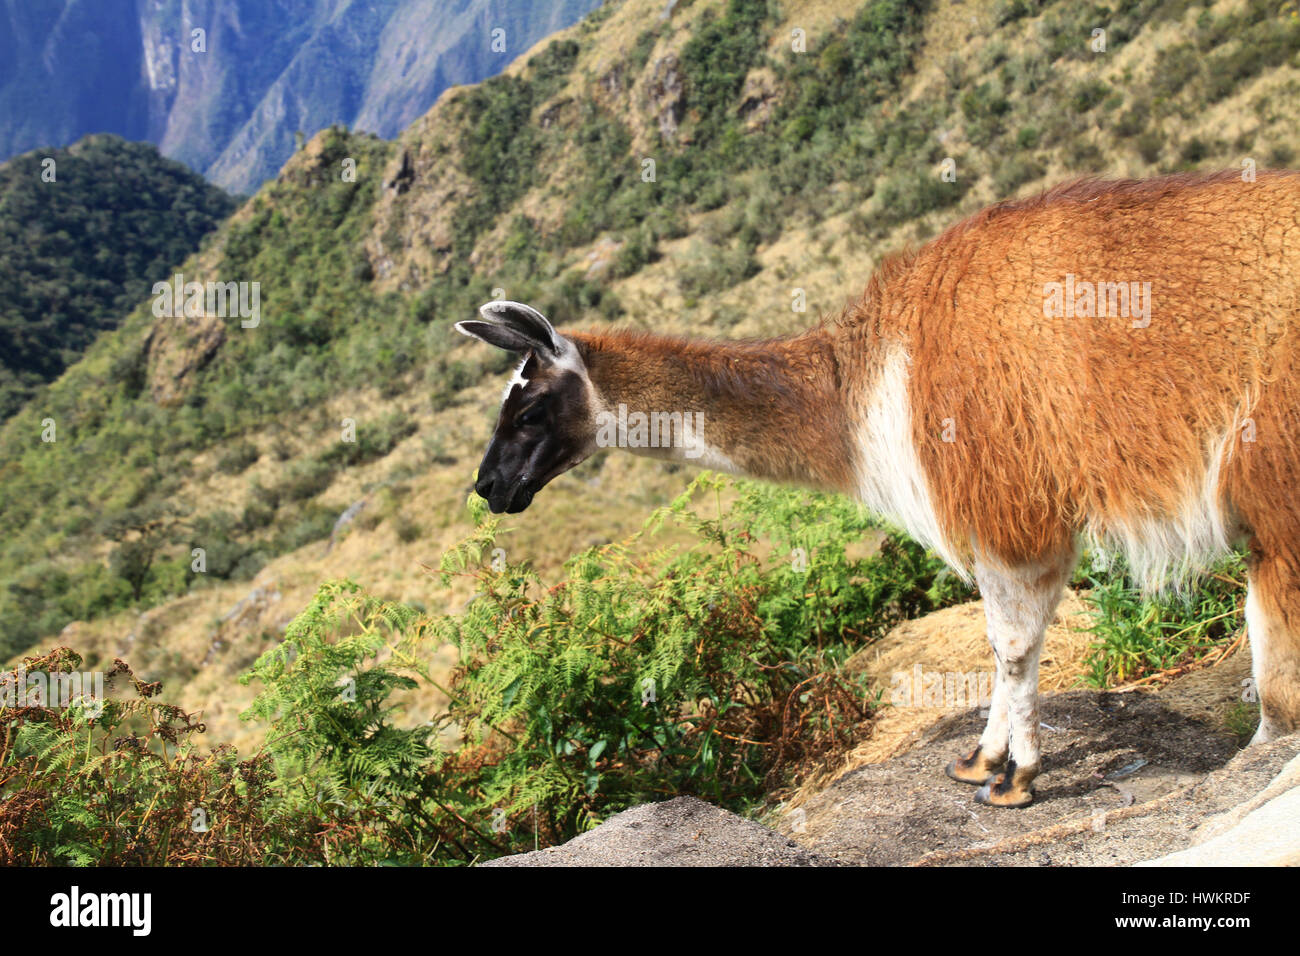 Llama on the Inca Trail in Peru Stock Photo